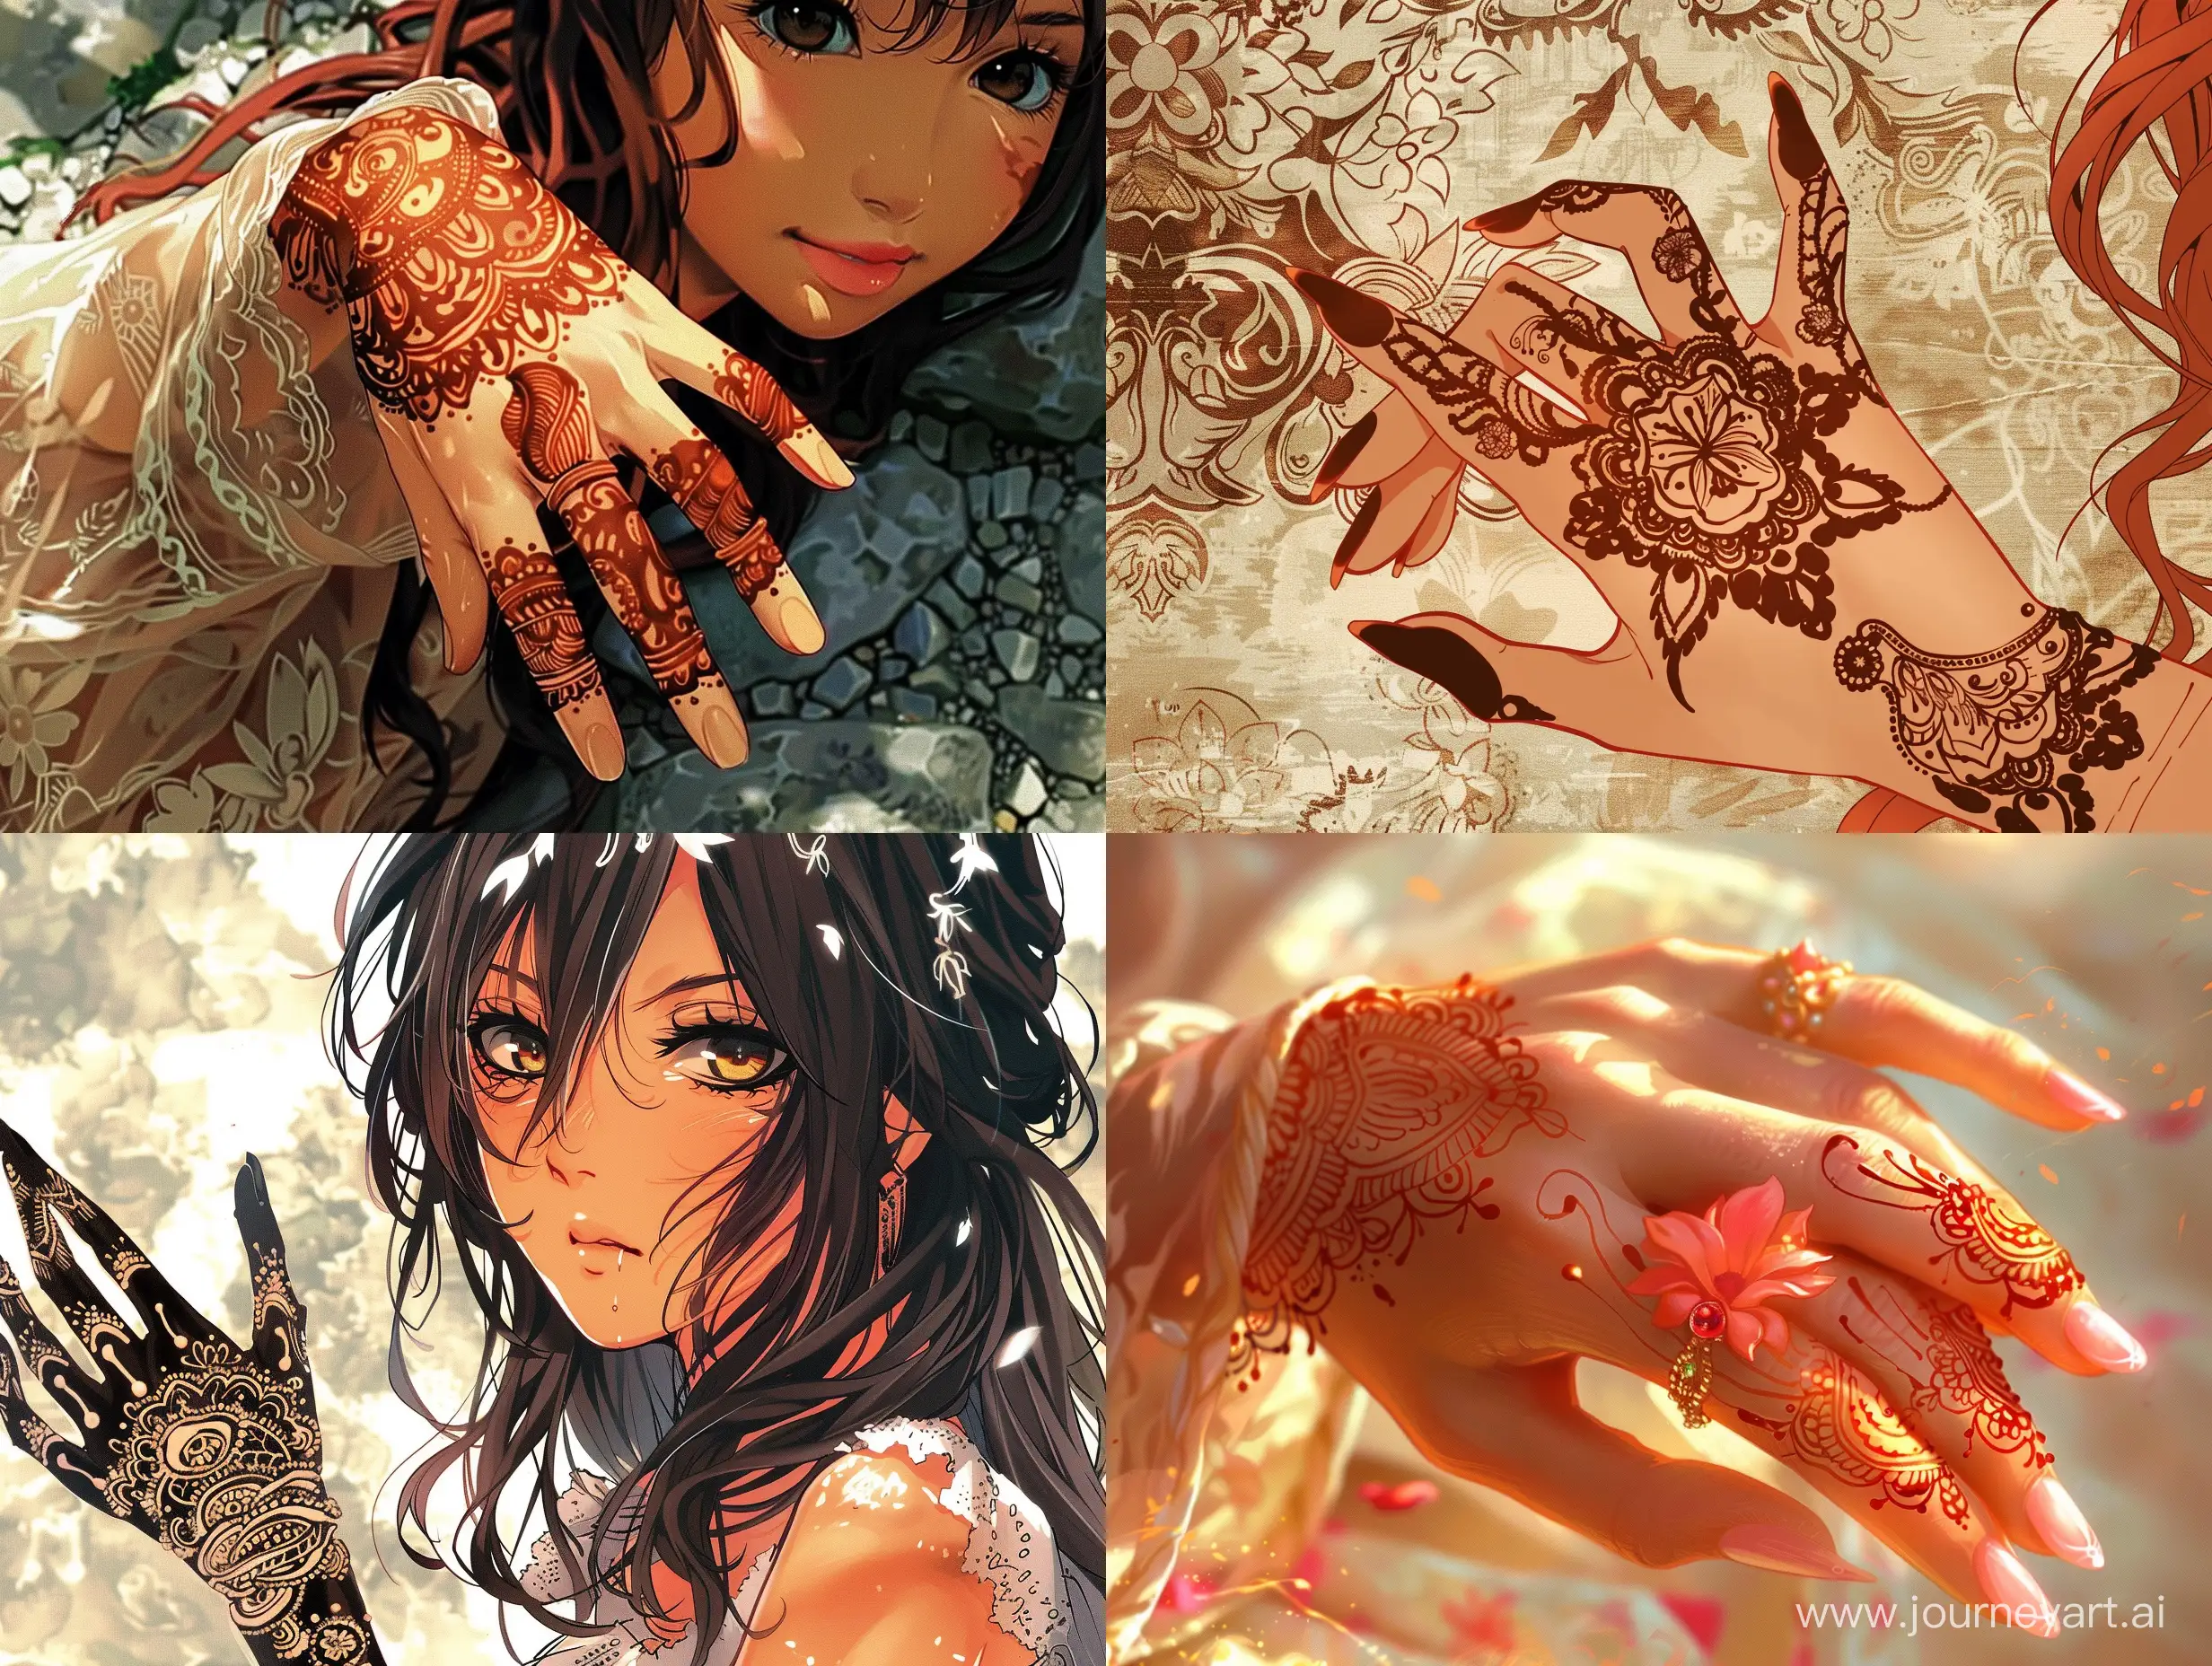 Anime-Hot-Girl-with-Henna-Hand-in-43-Aspect-Ratio